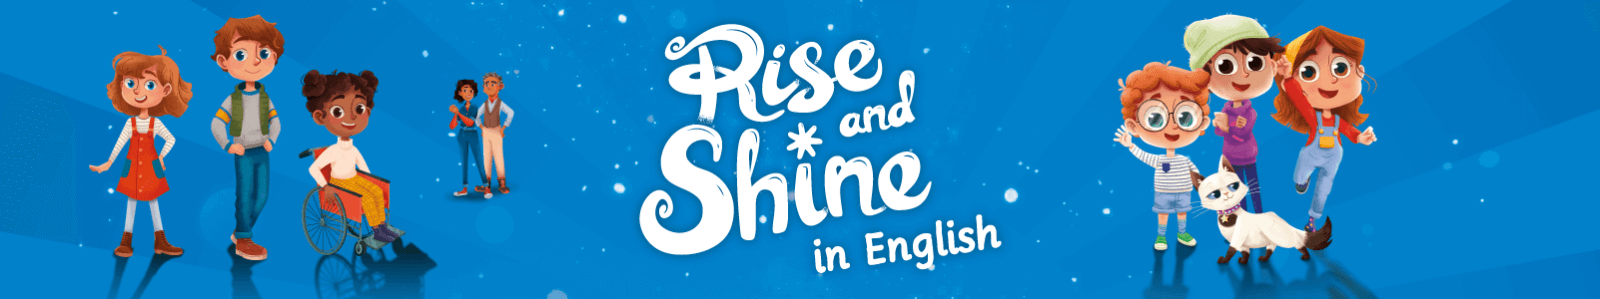 rise-and-shine-english